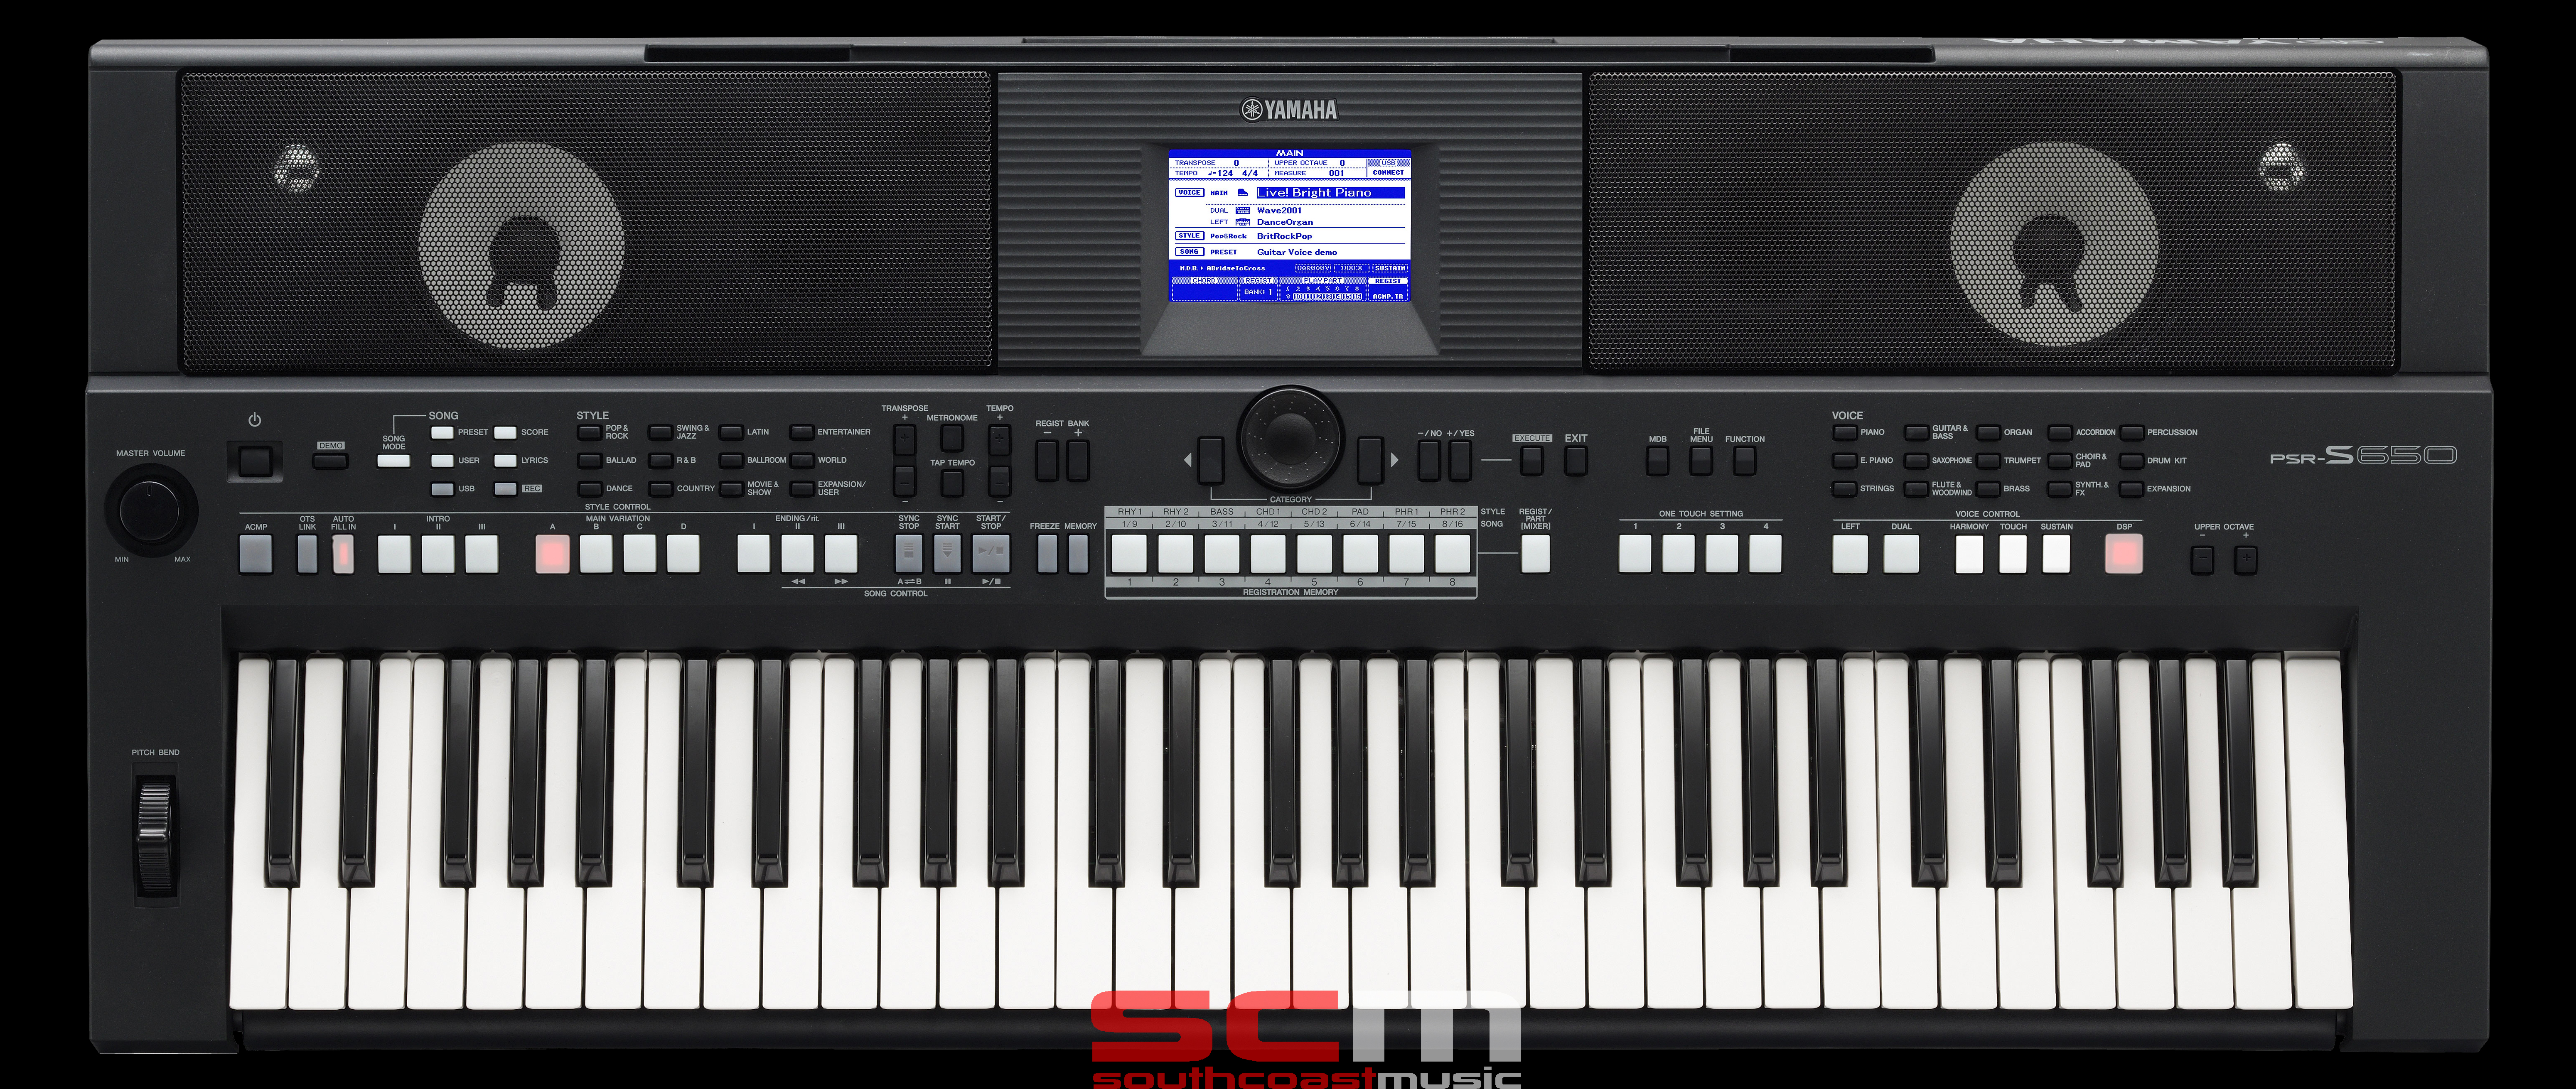 Yamaha Arranger Workstation PSR-S550B Keyboard